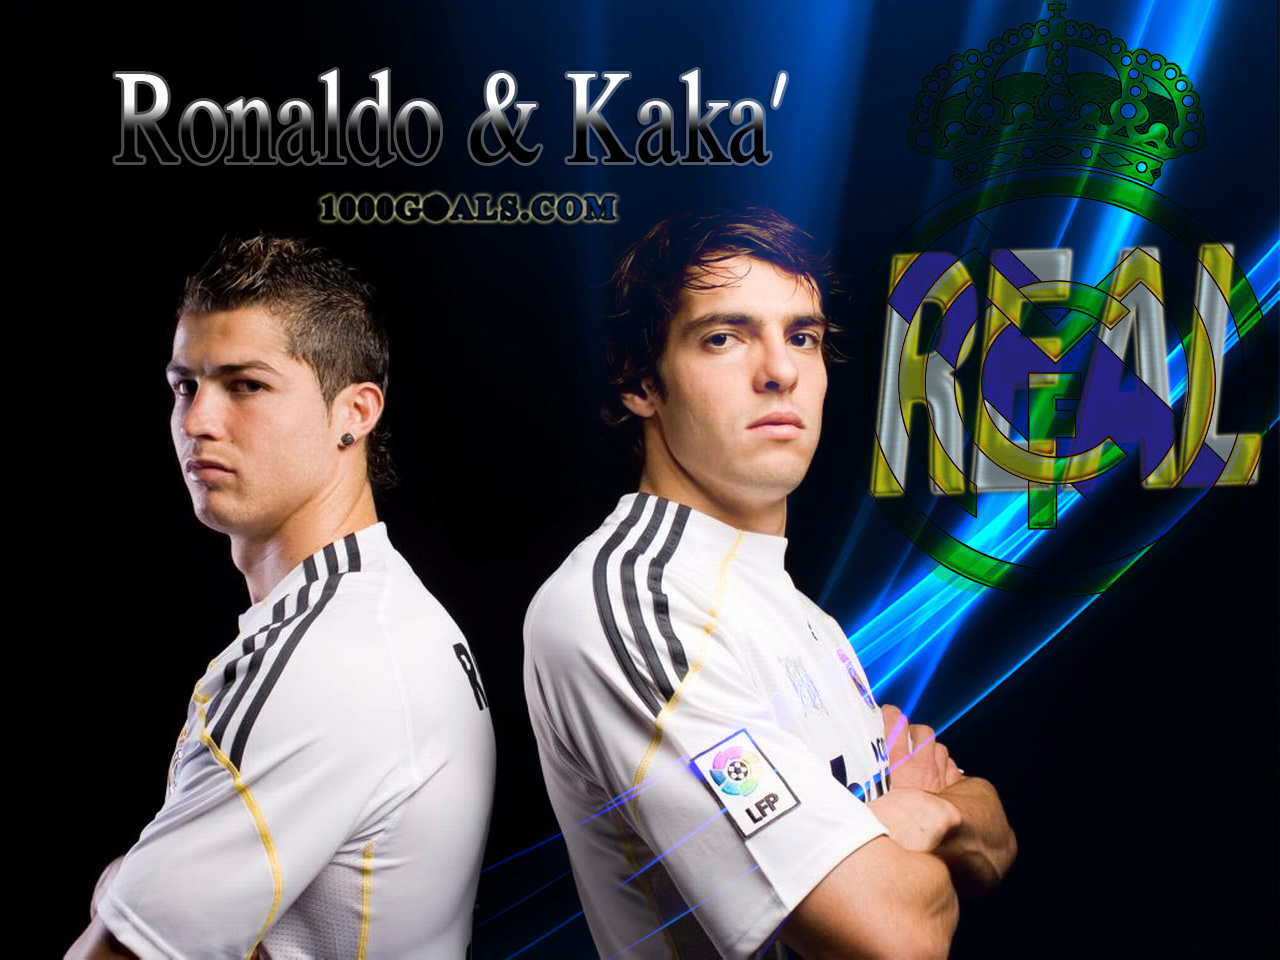 http://1.bp.blogspot.com/-5-_DxXsY8PU/TWIljMyXZCI/AAAAAAAAAC0/eLTNZ6PbRCs/s1600/Real+Madrid+Cristiano+Ronaldo+%2526+Kaka+Football+Players.jpg